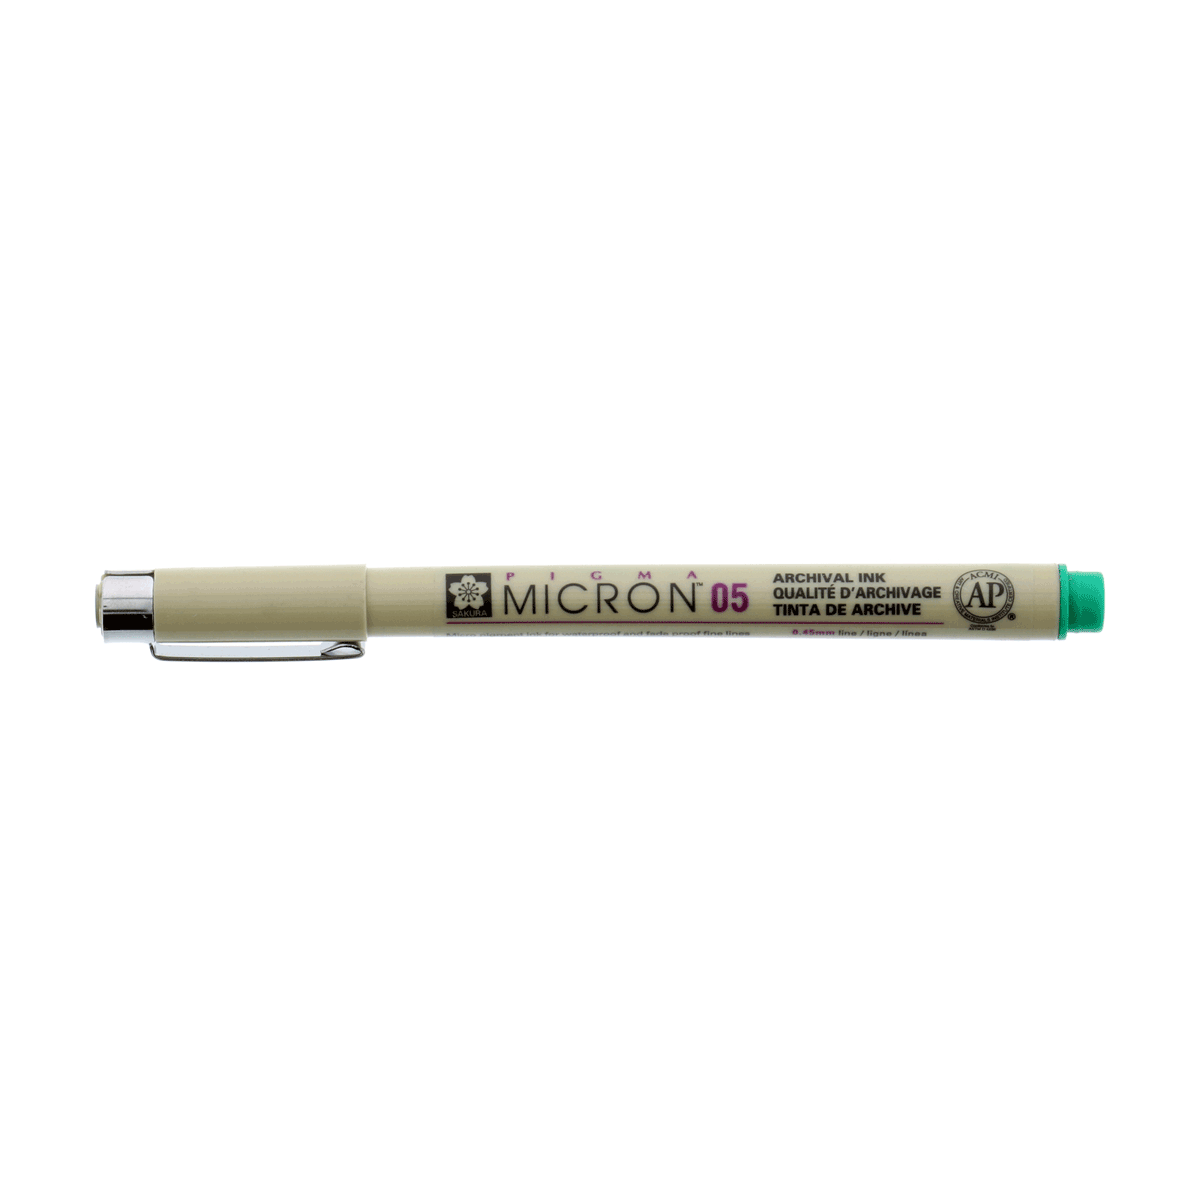 Micron Pigma Pen - Green 05 .45mm Line